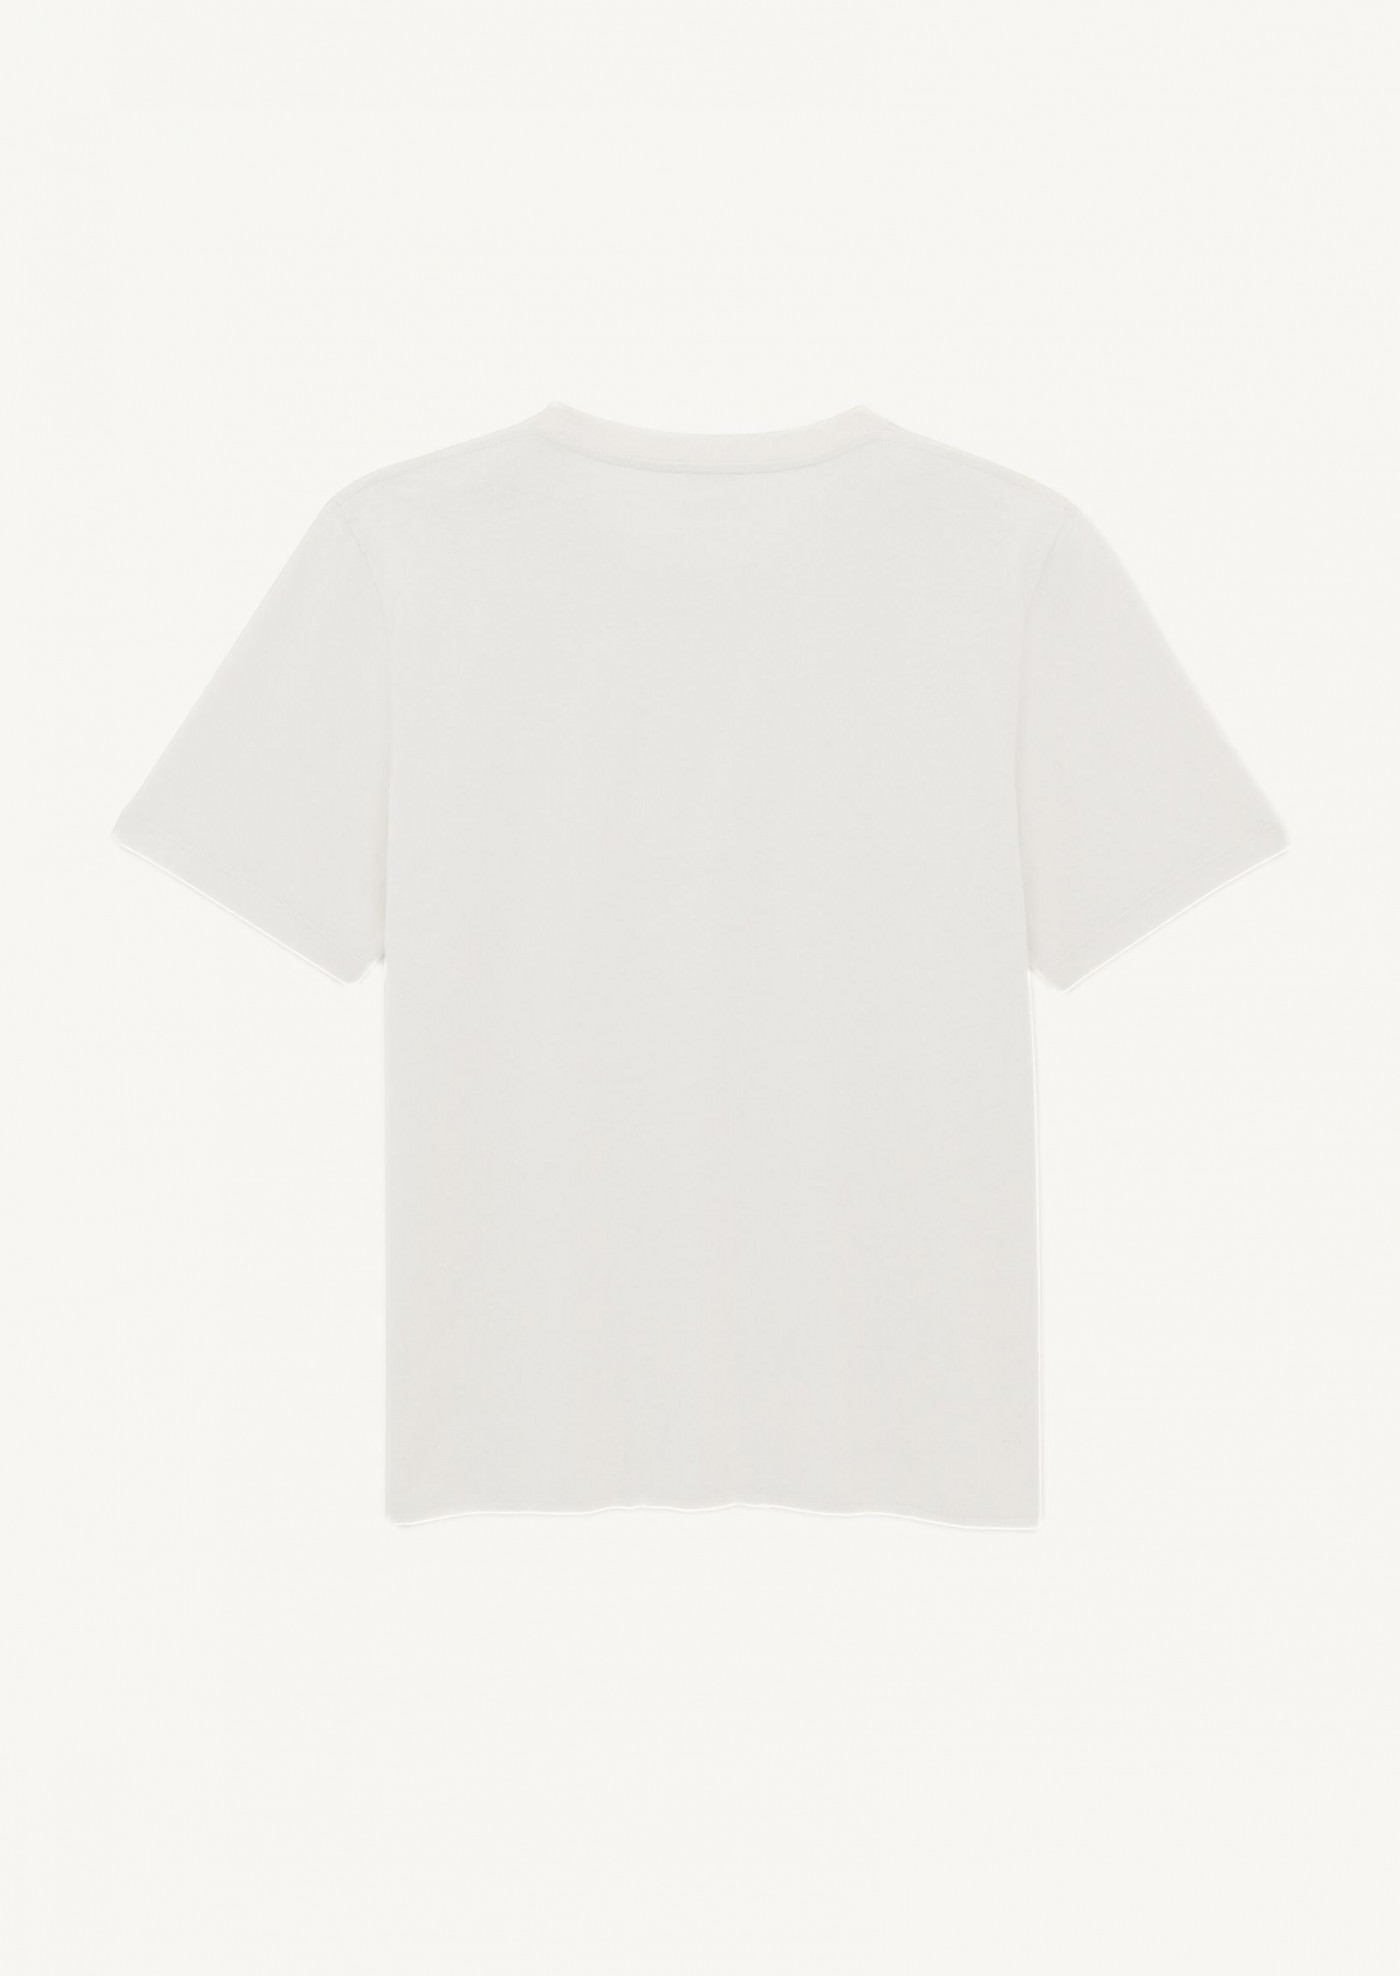 Saint Laurent ecru embroidered t-shirt